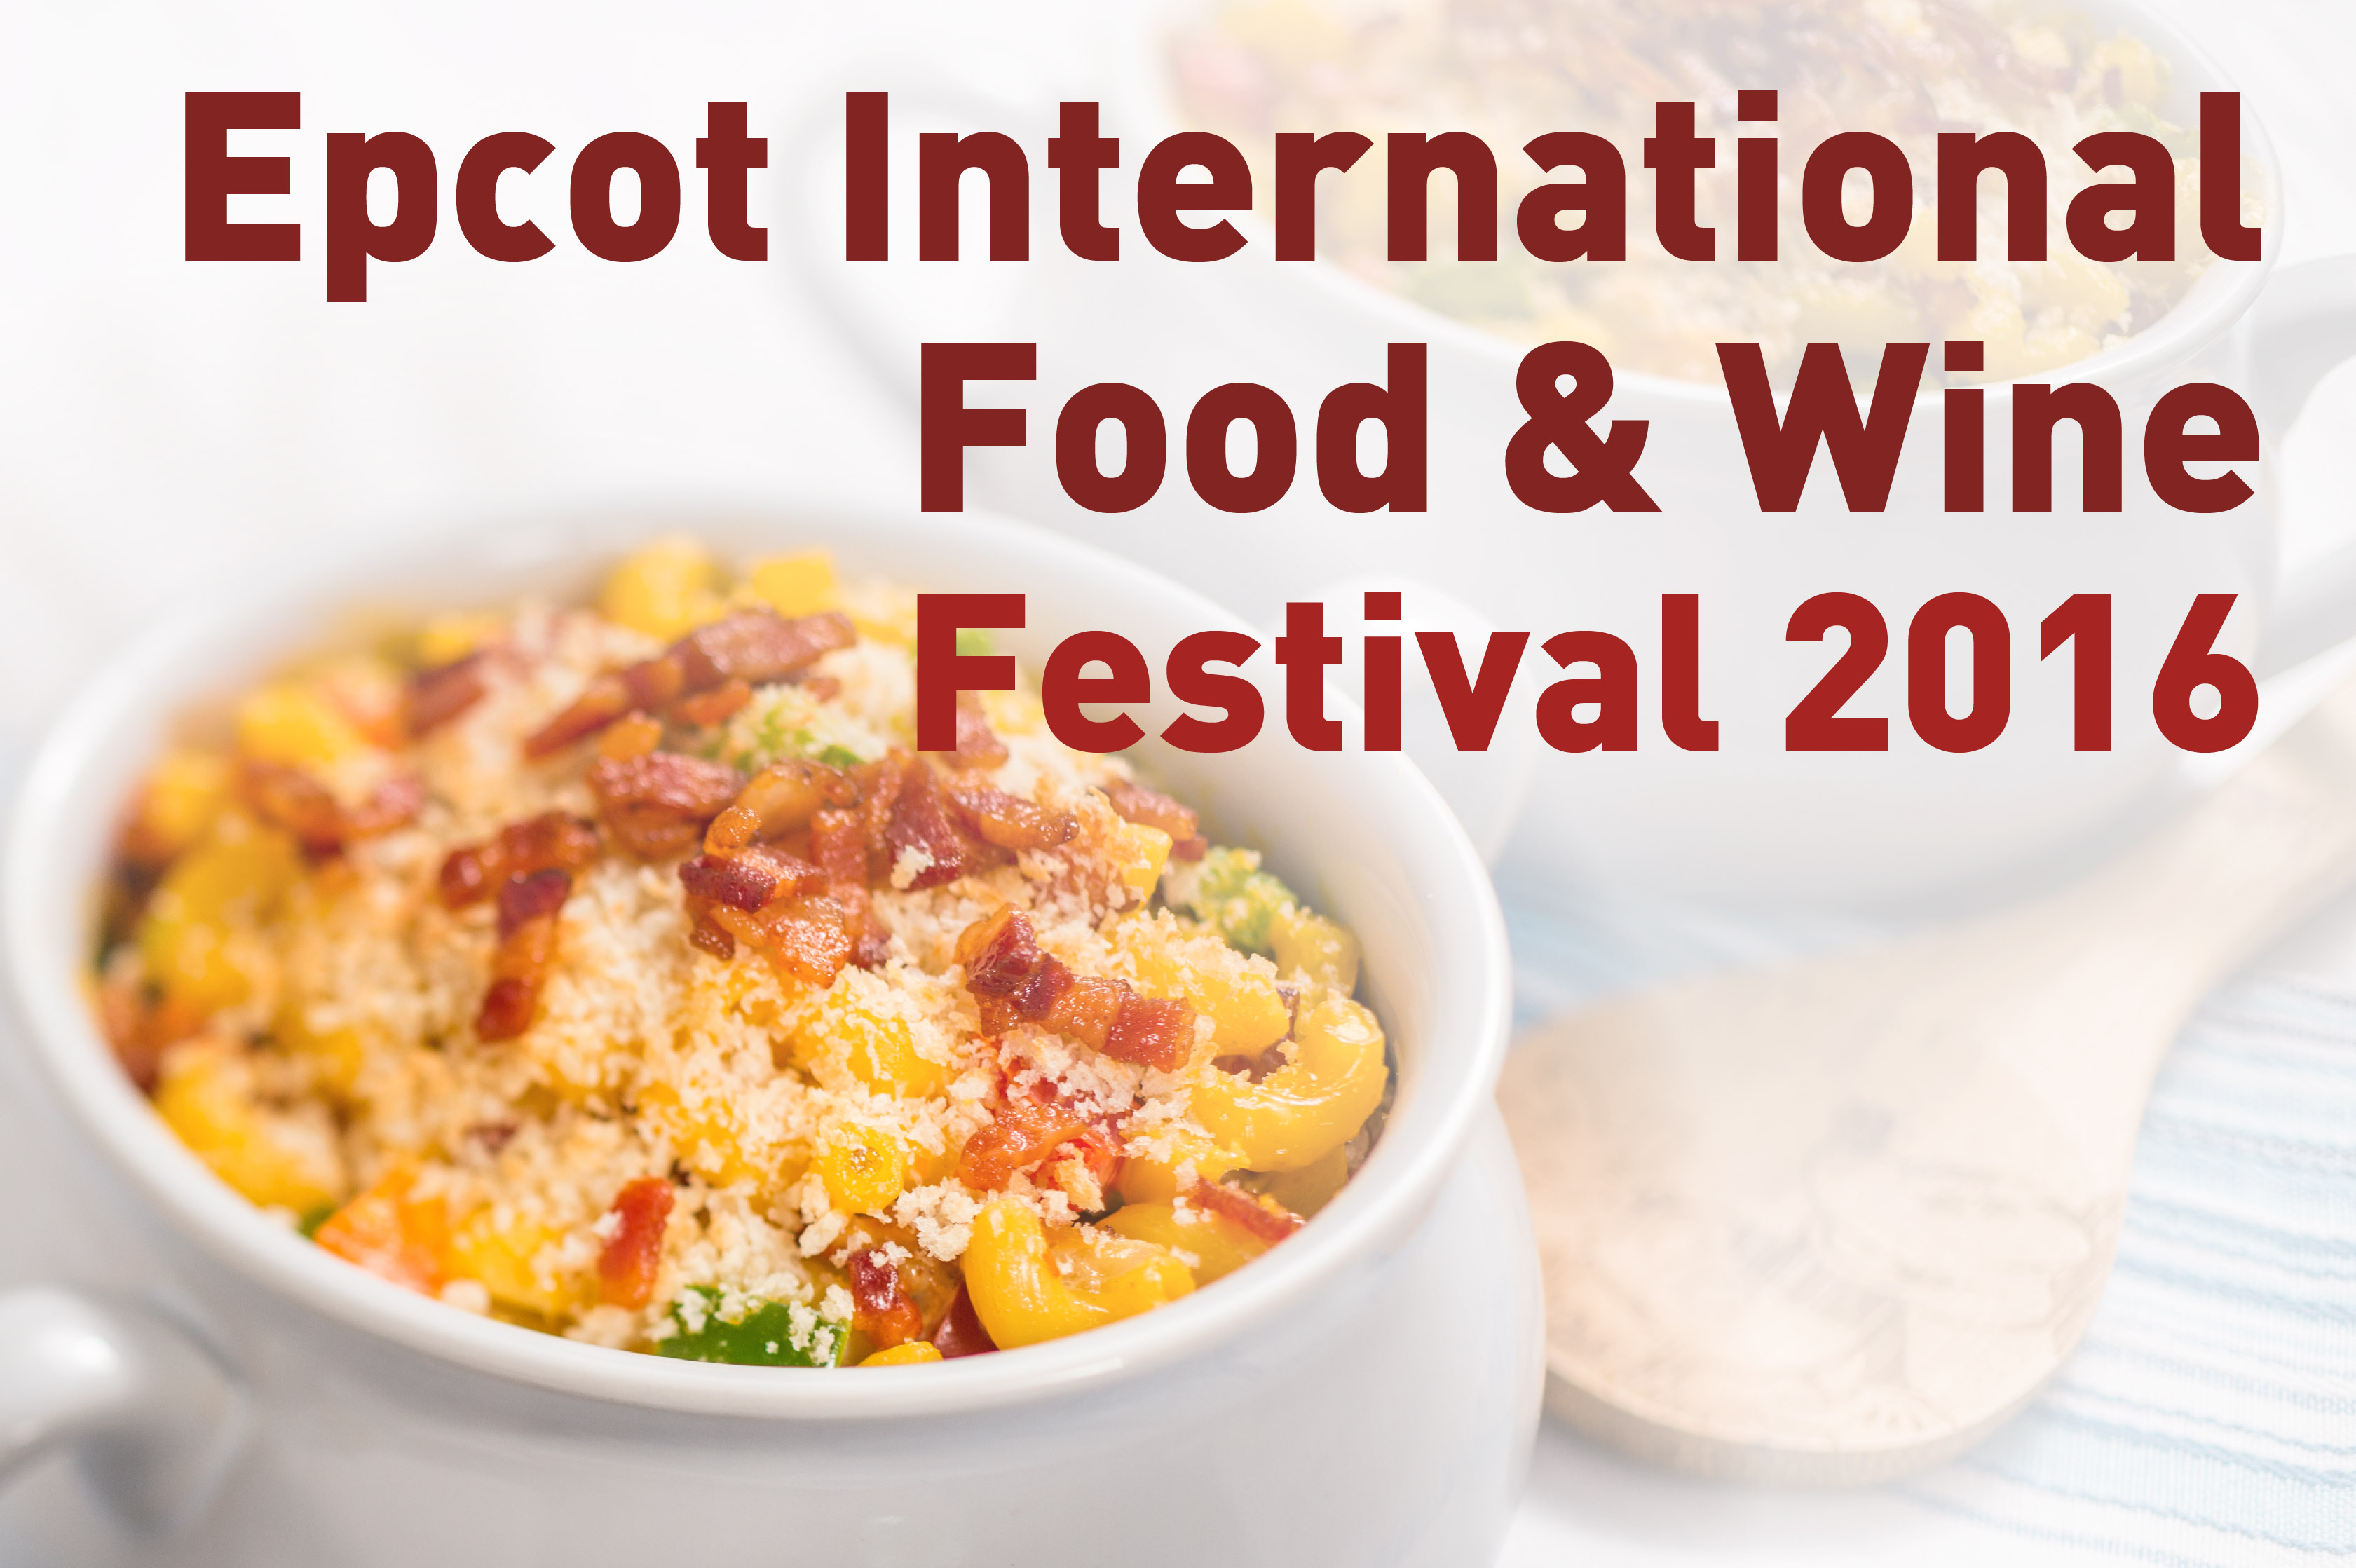 Epcot International food & wine festival 2016